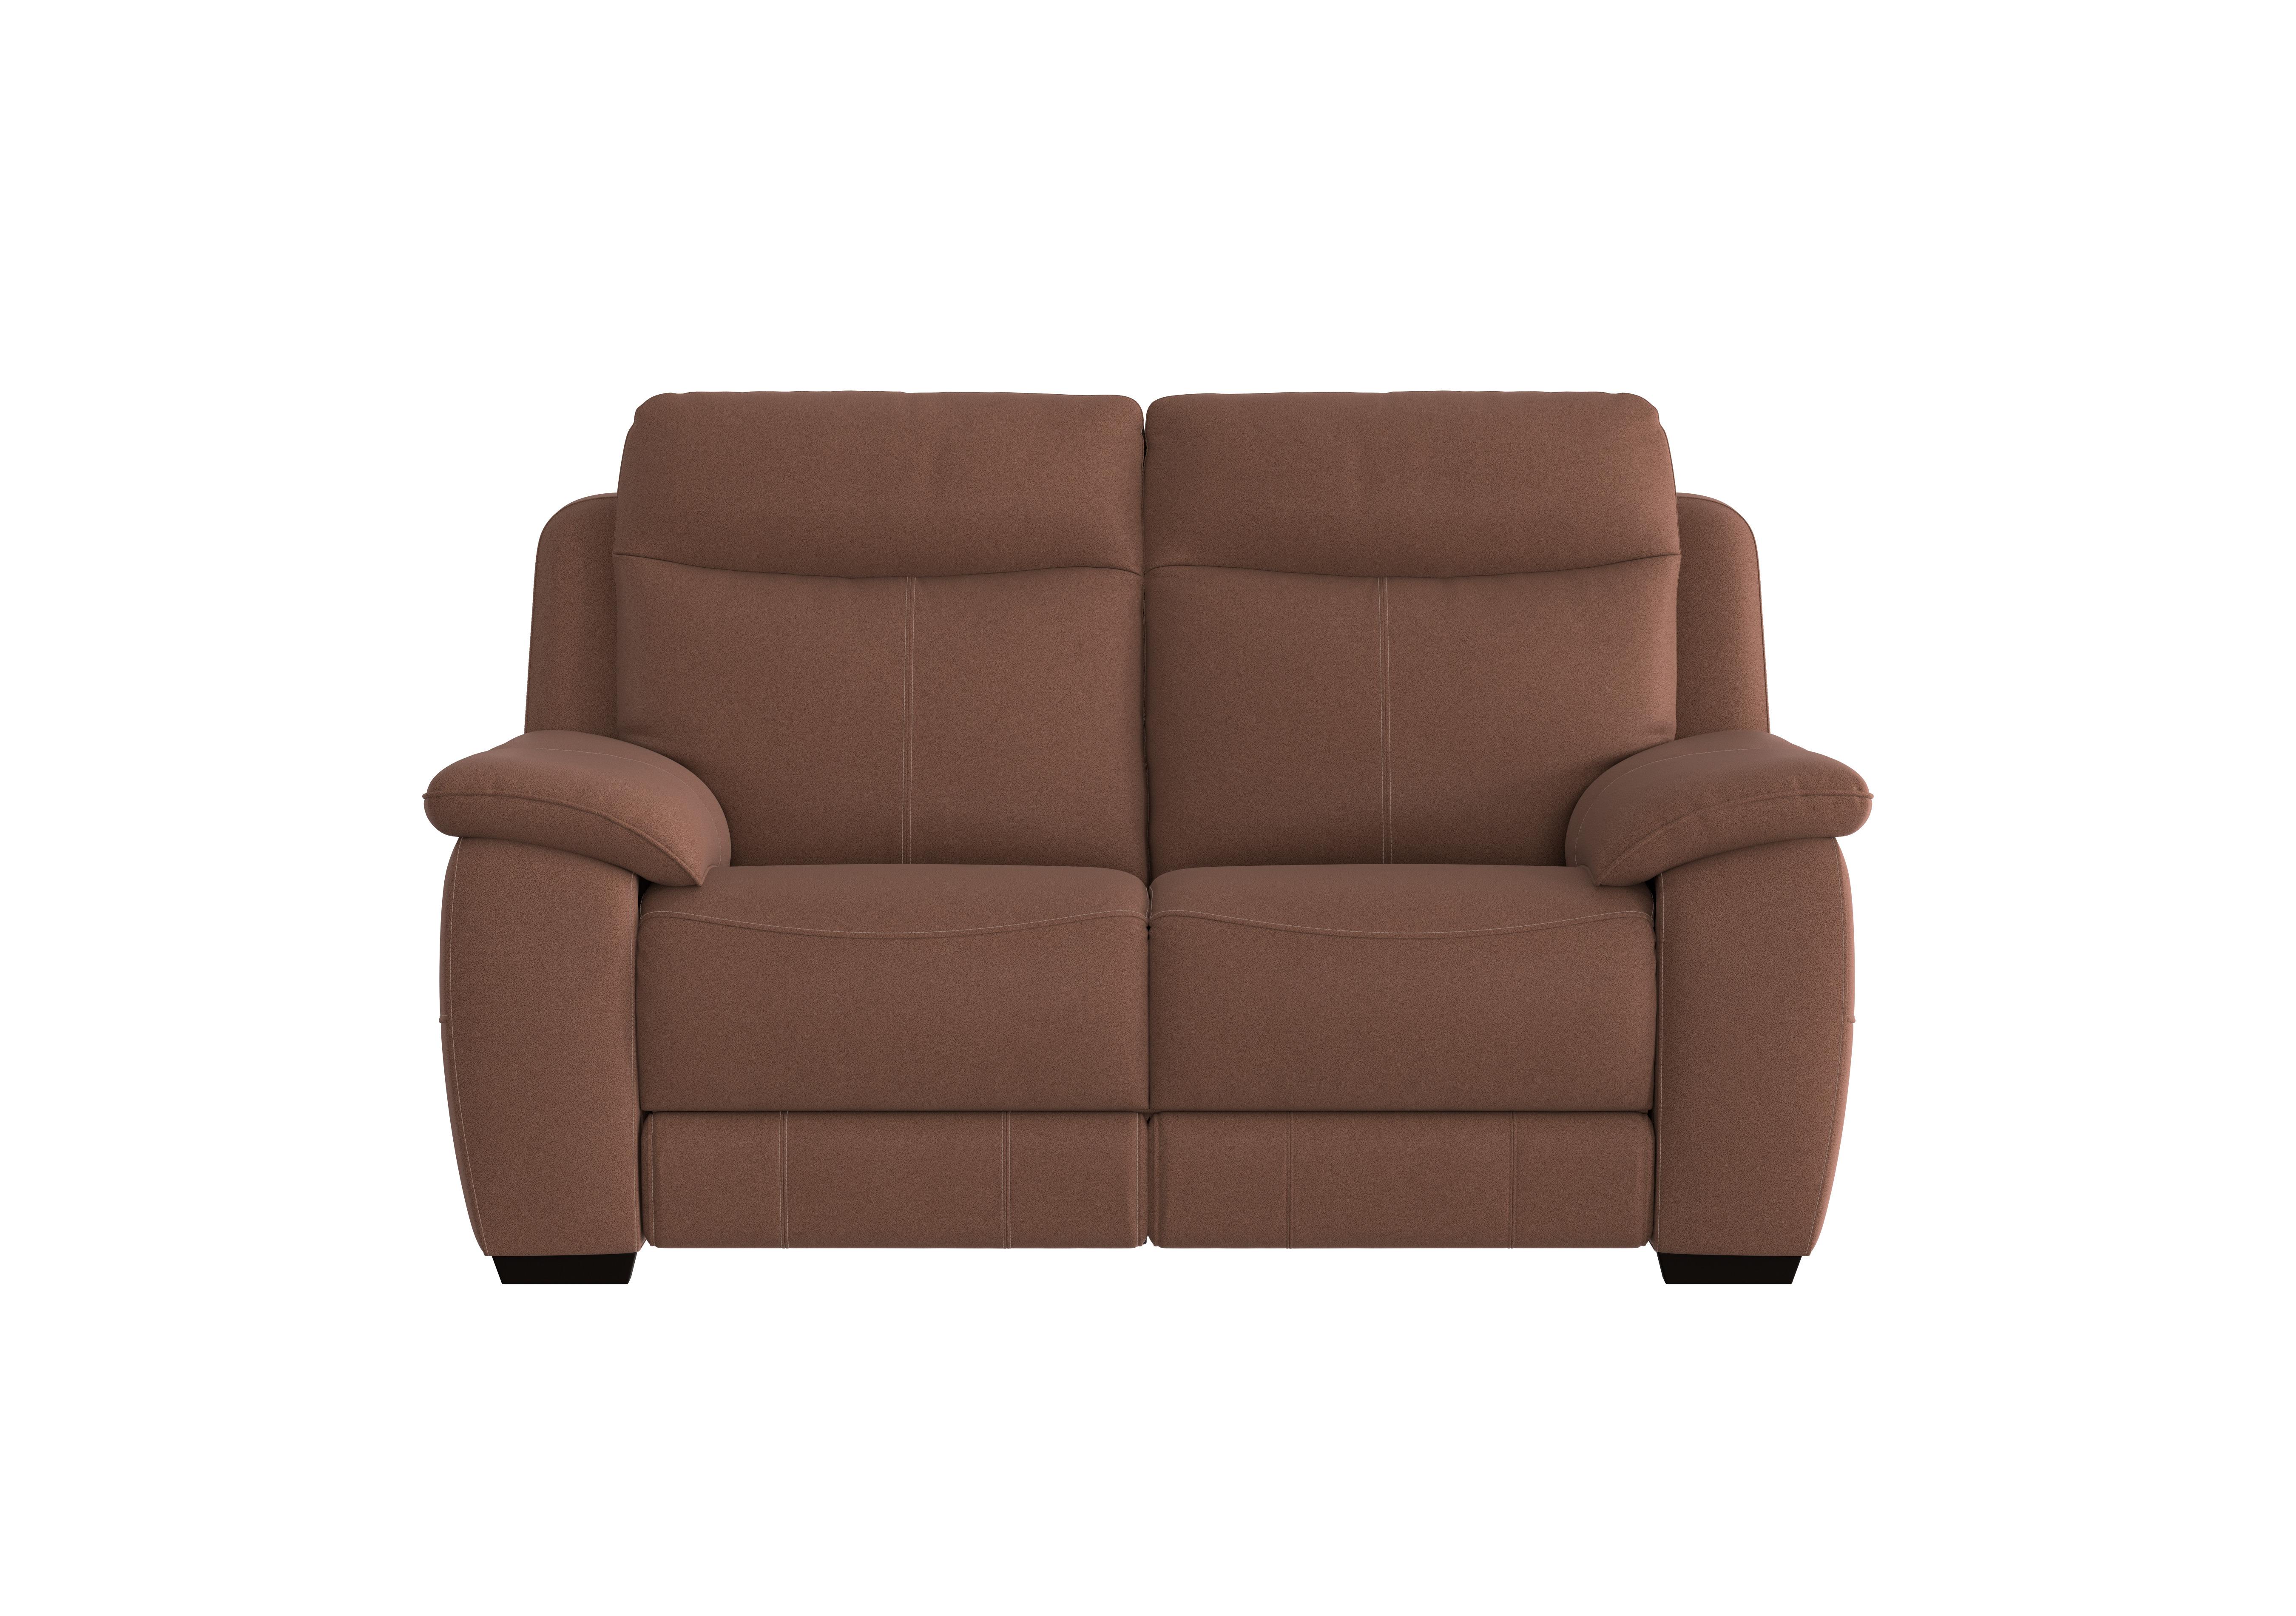 Starlight Express 2 Seater Fabric Sofa in Bfa-Blj-R05 Hazelnut on Furniture Village